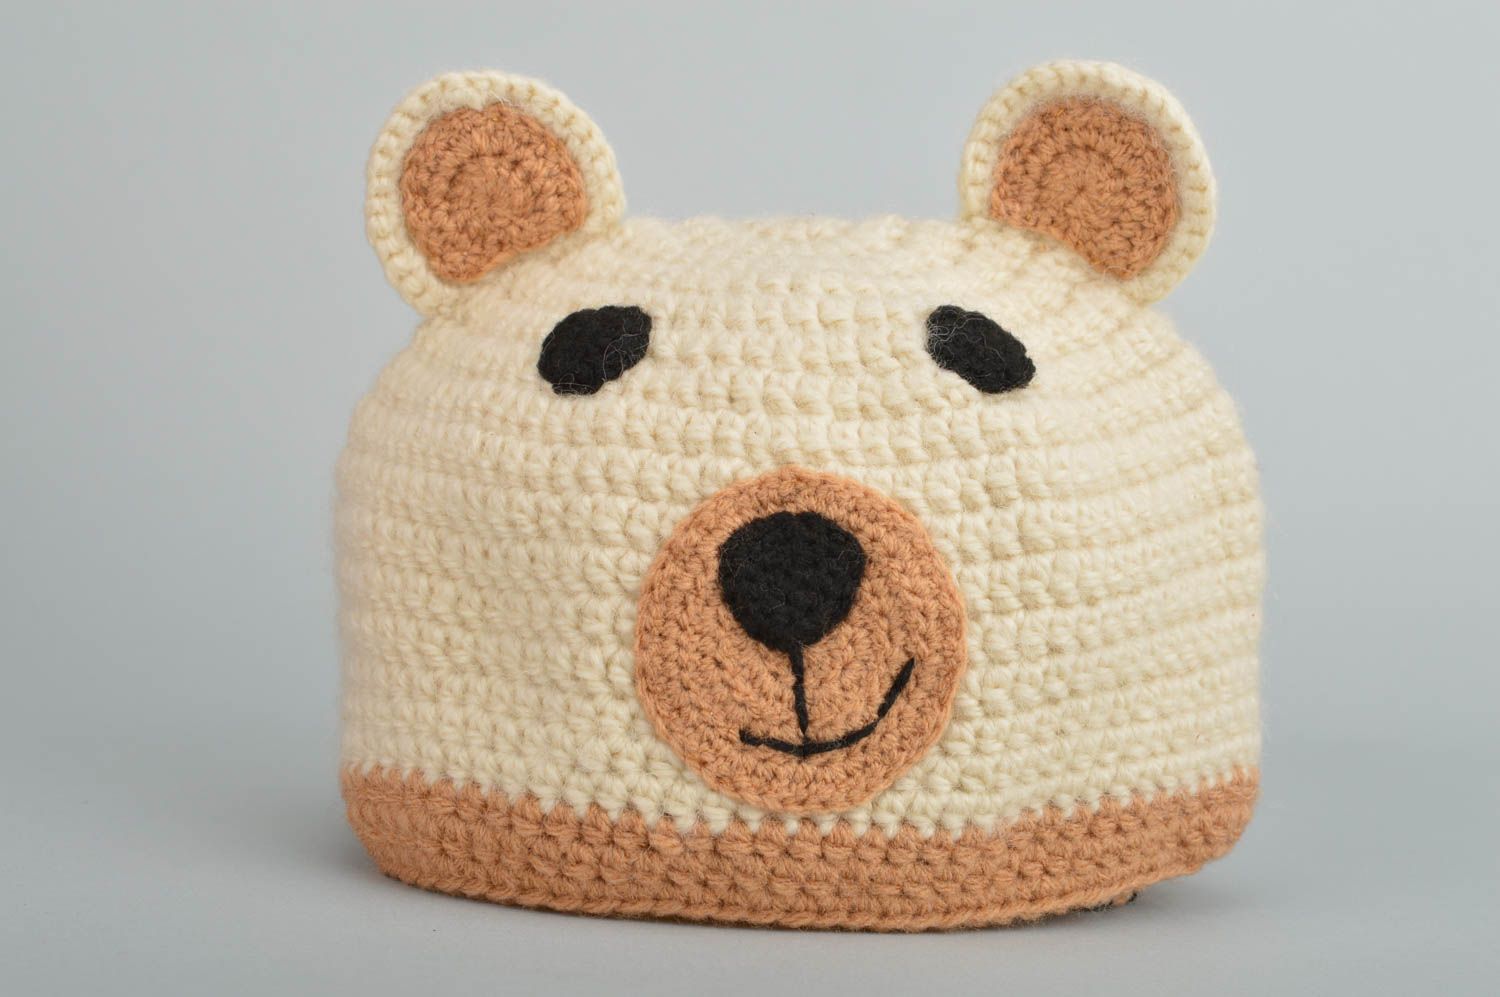 Crocheted beautiful unusual cute cap brown bear on strings 370 mm for kids photo 1